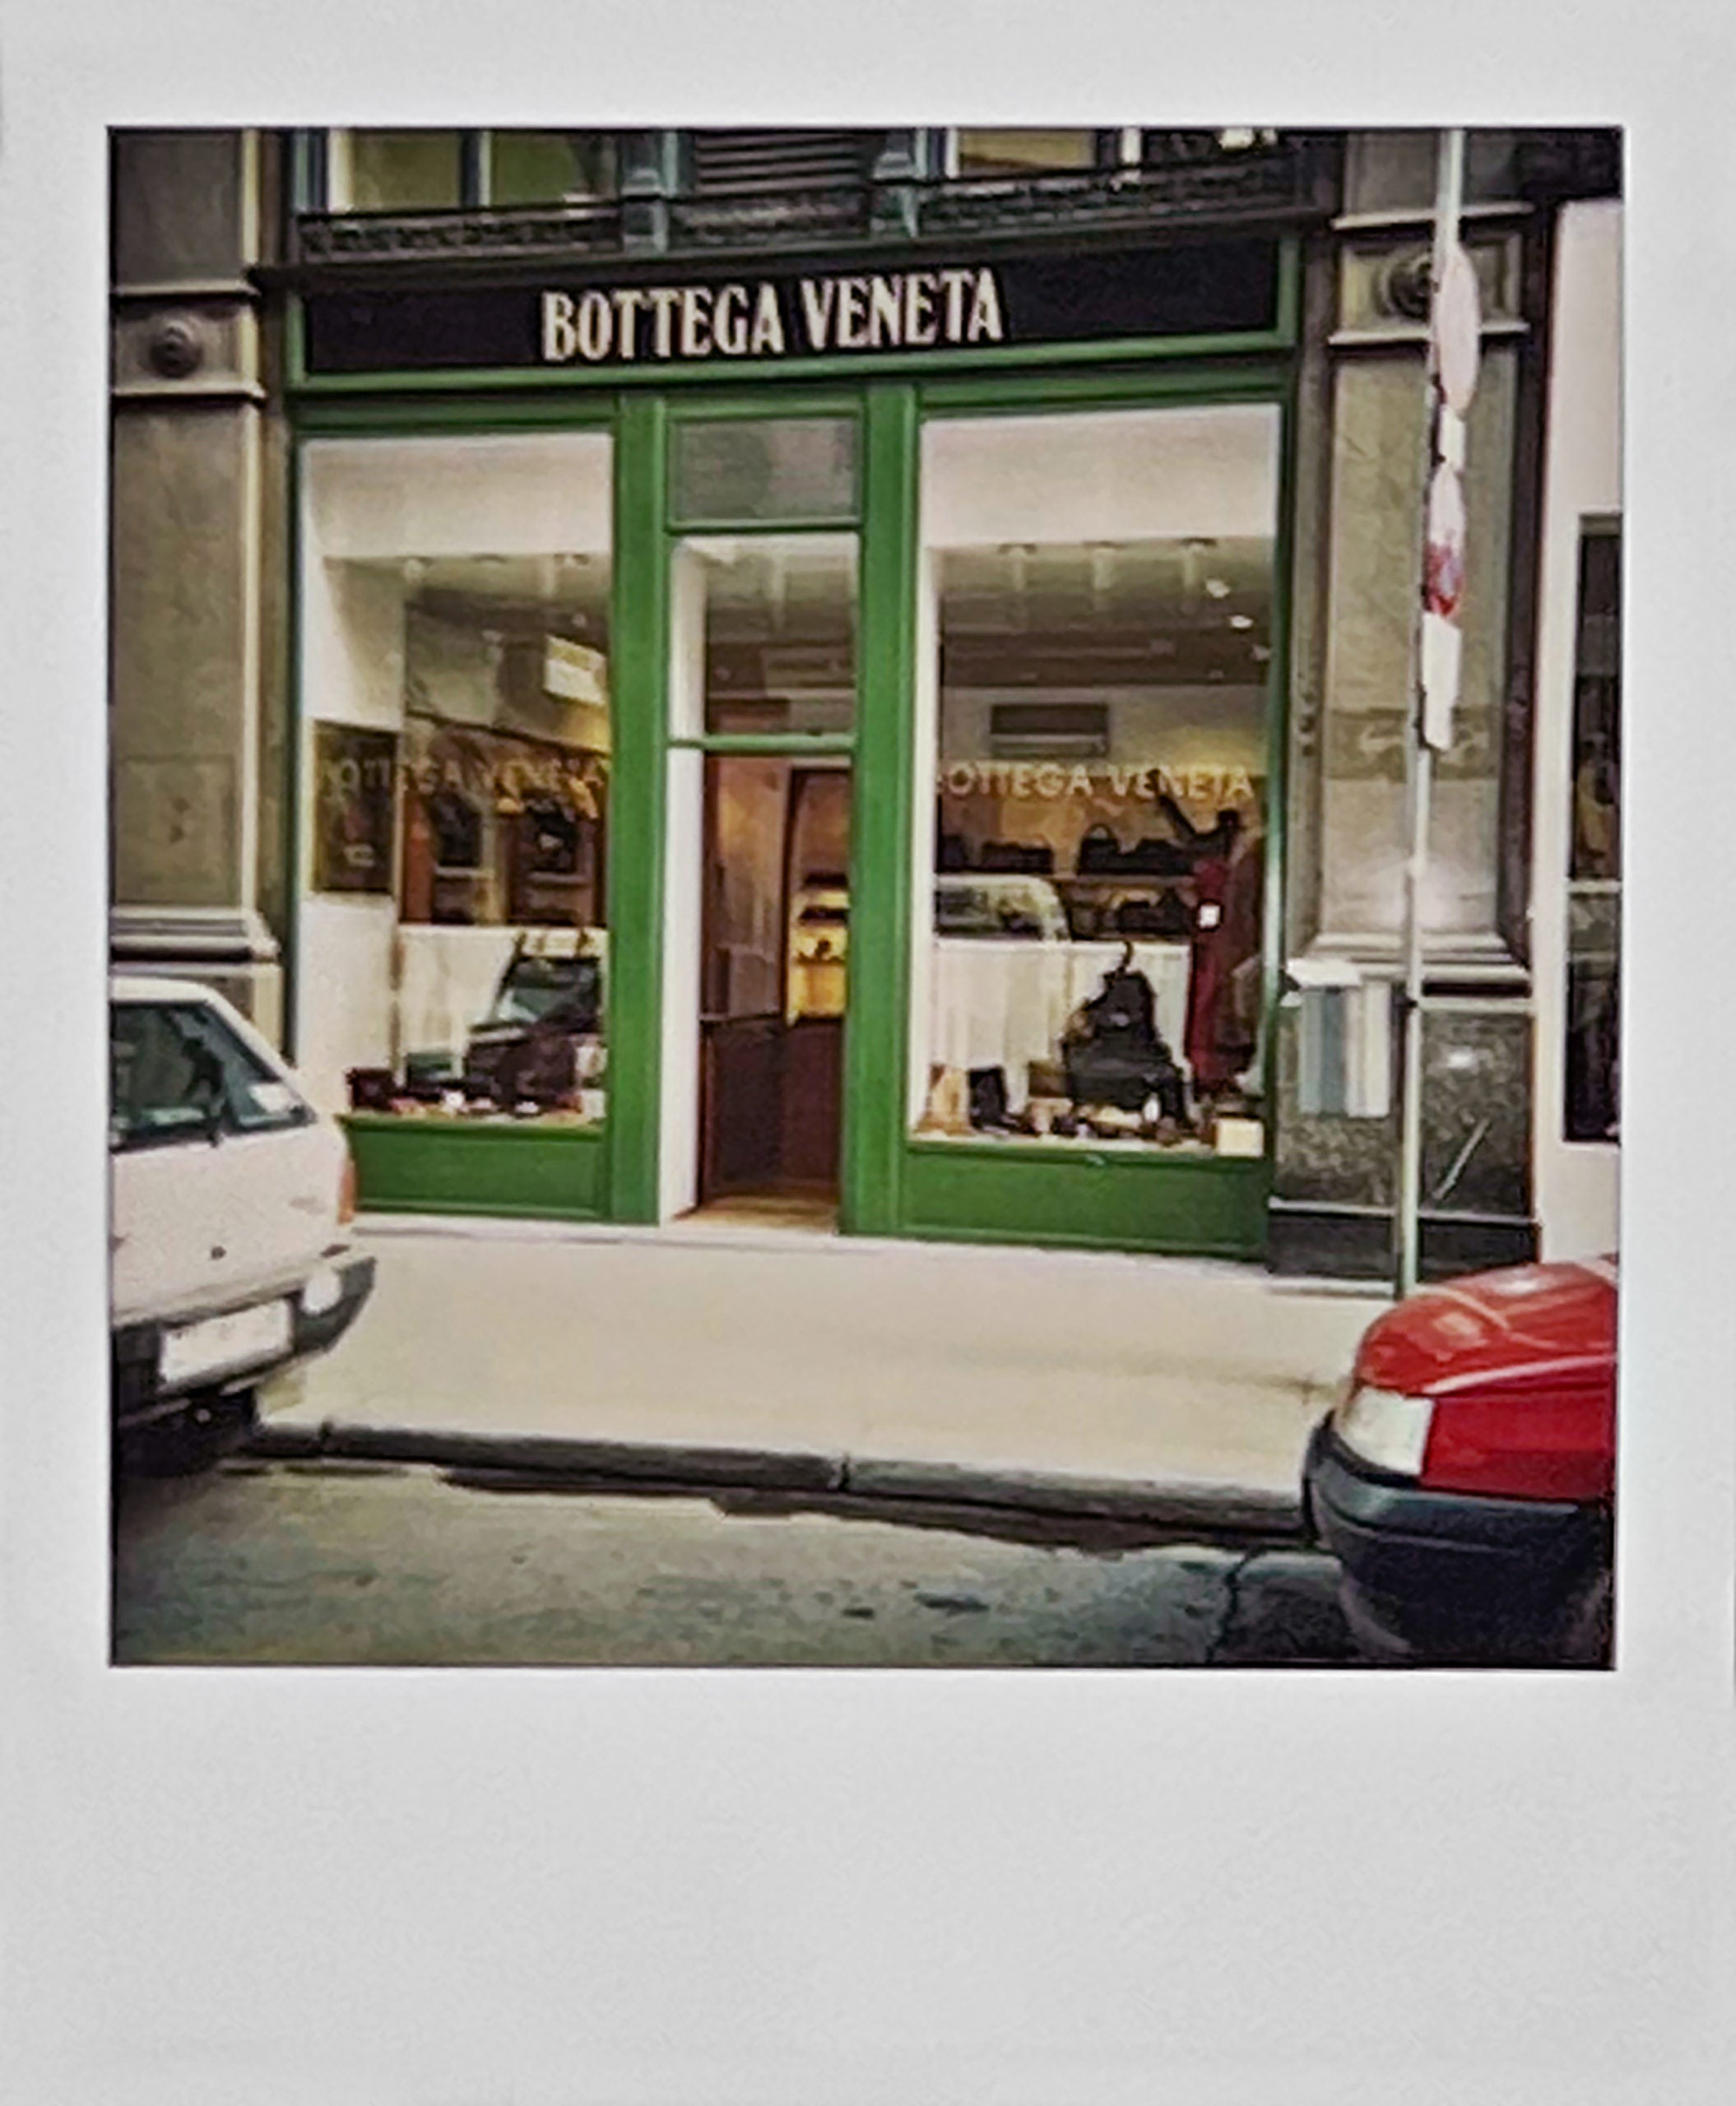 Bottega Veneta 101: A History - The Vault